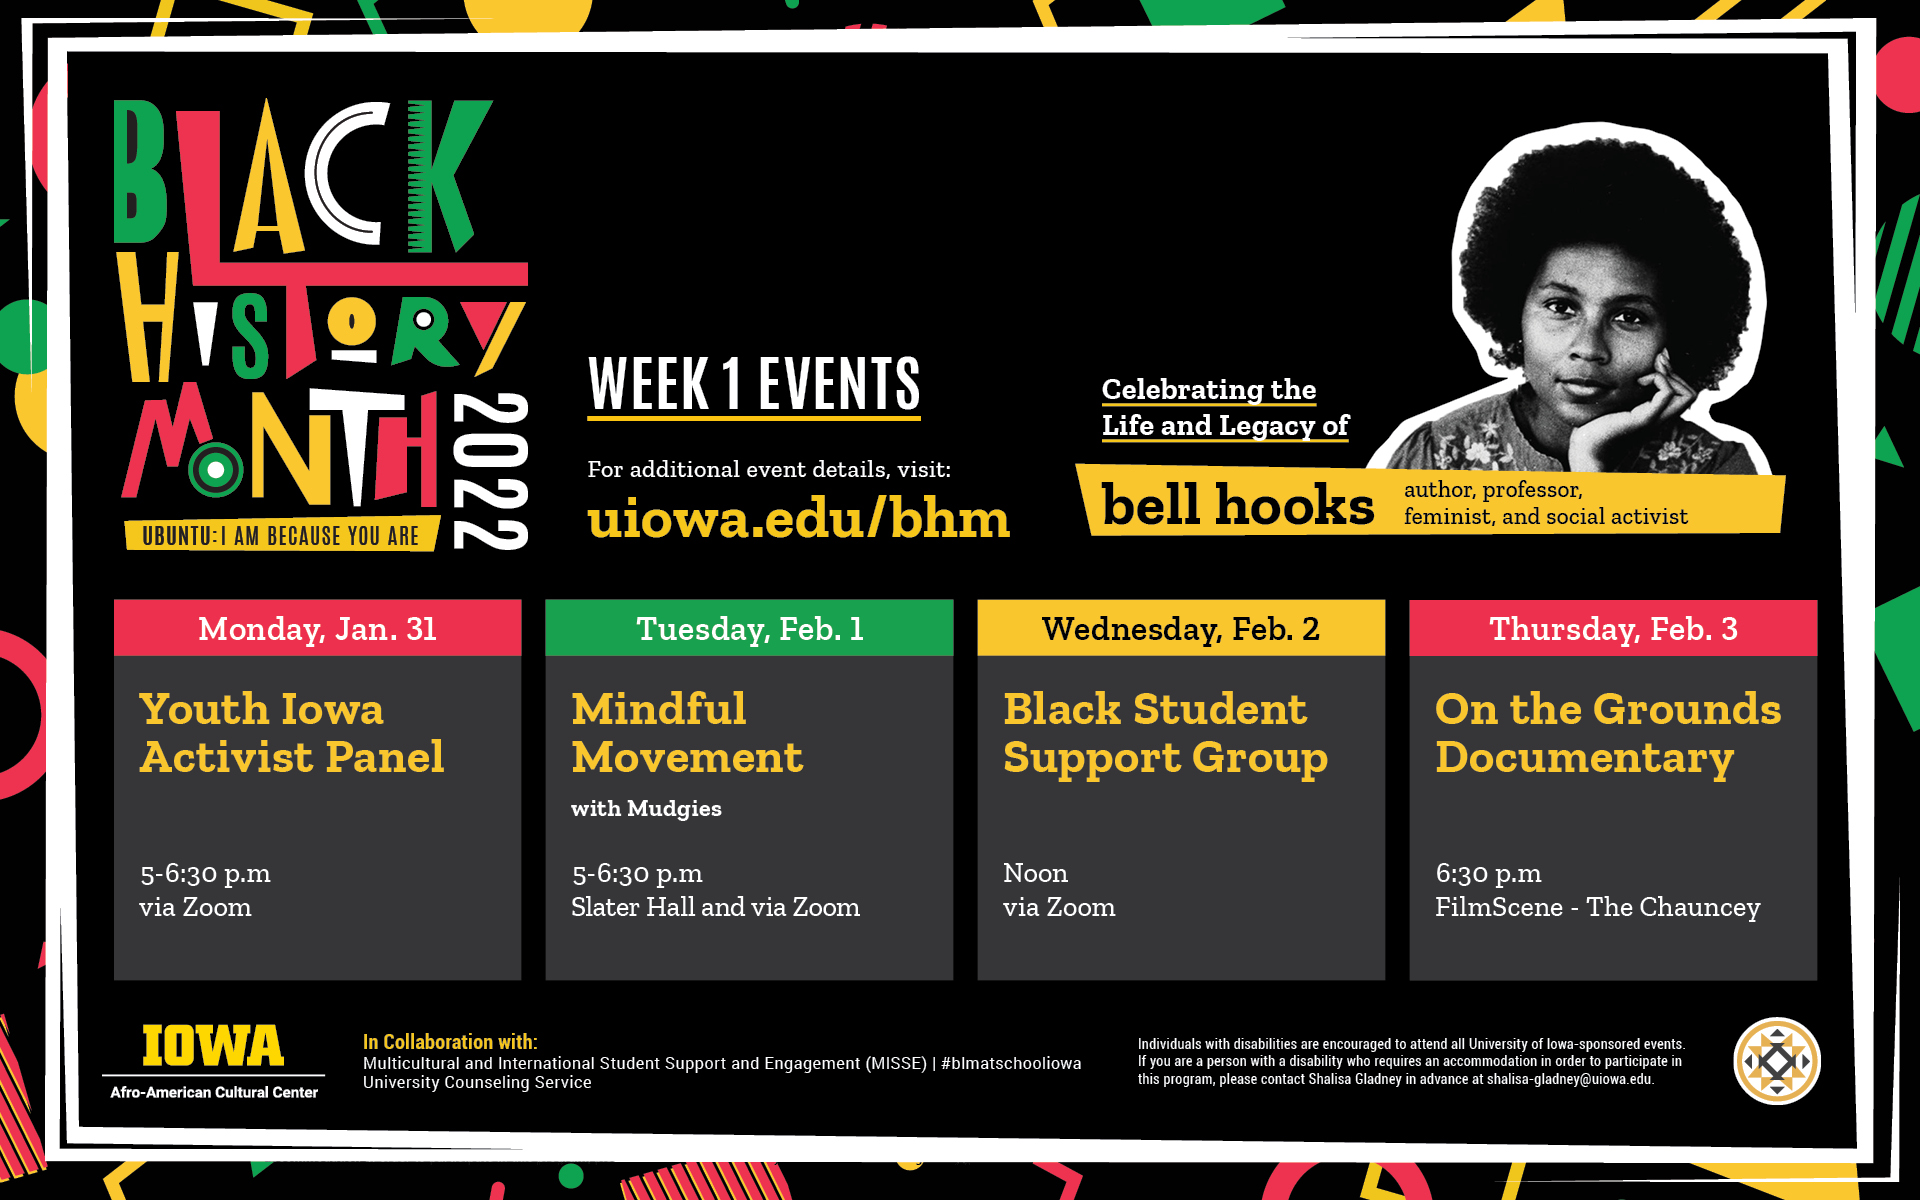 Week one black history month events. view at uiowa.edu/blm